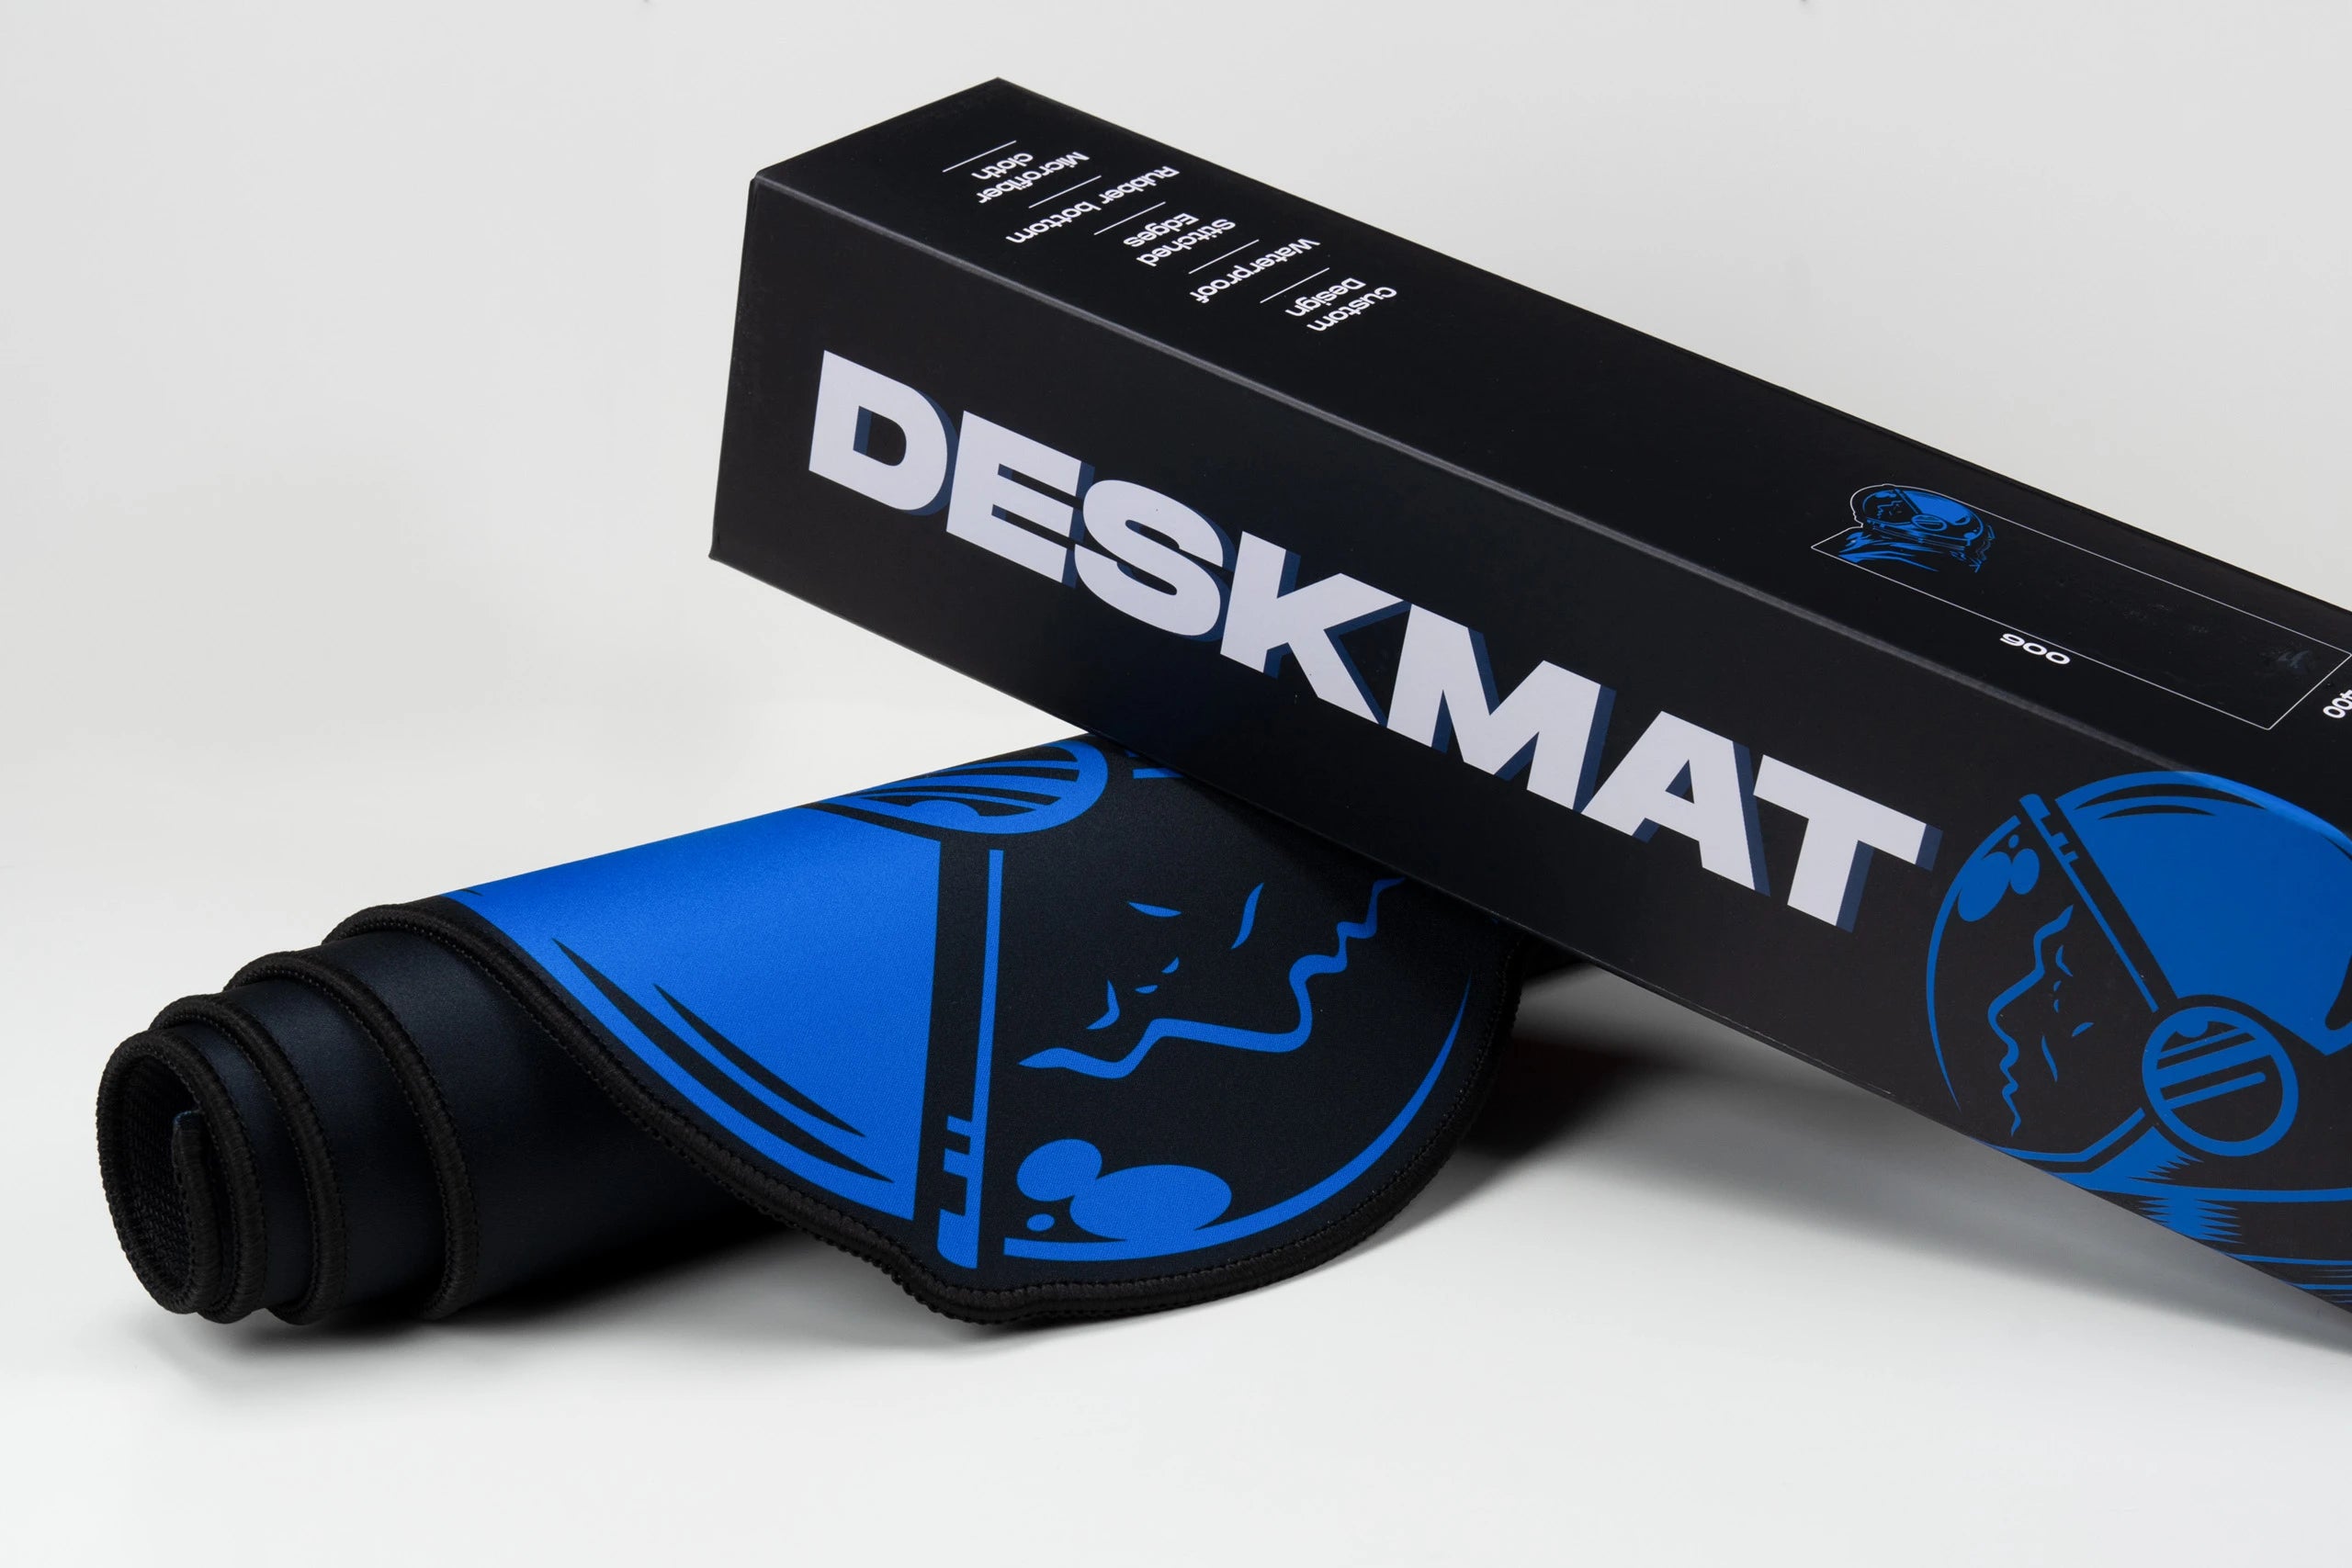 Deskmat Mousepad QwertyKey Spaceman Irregular 4mm stitched edges 